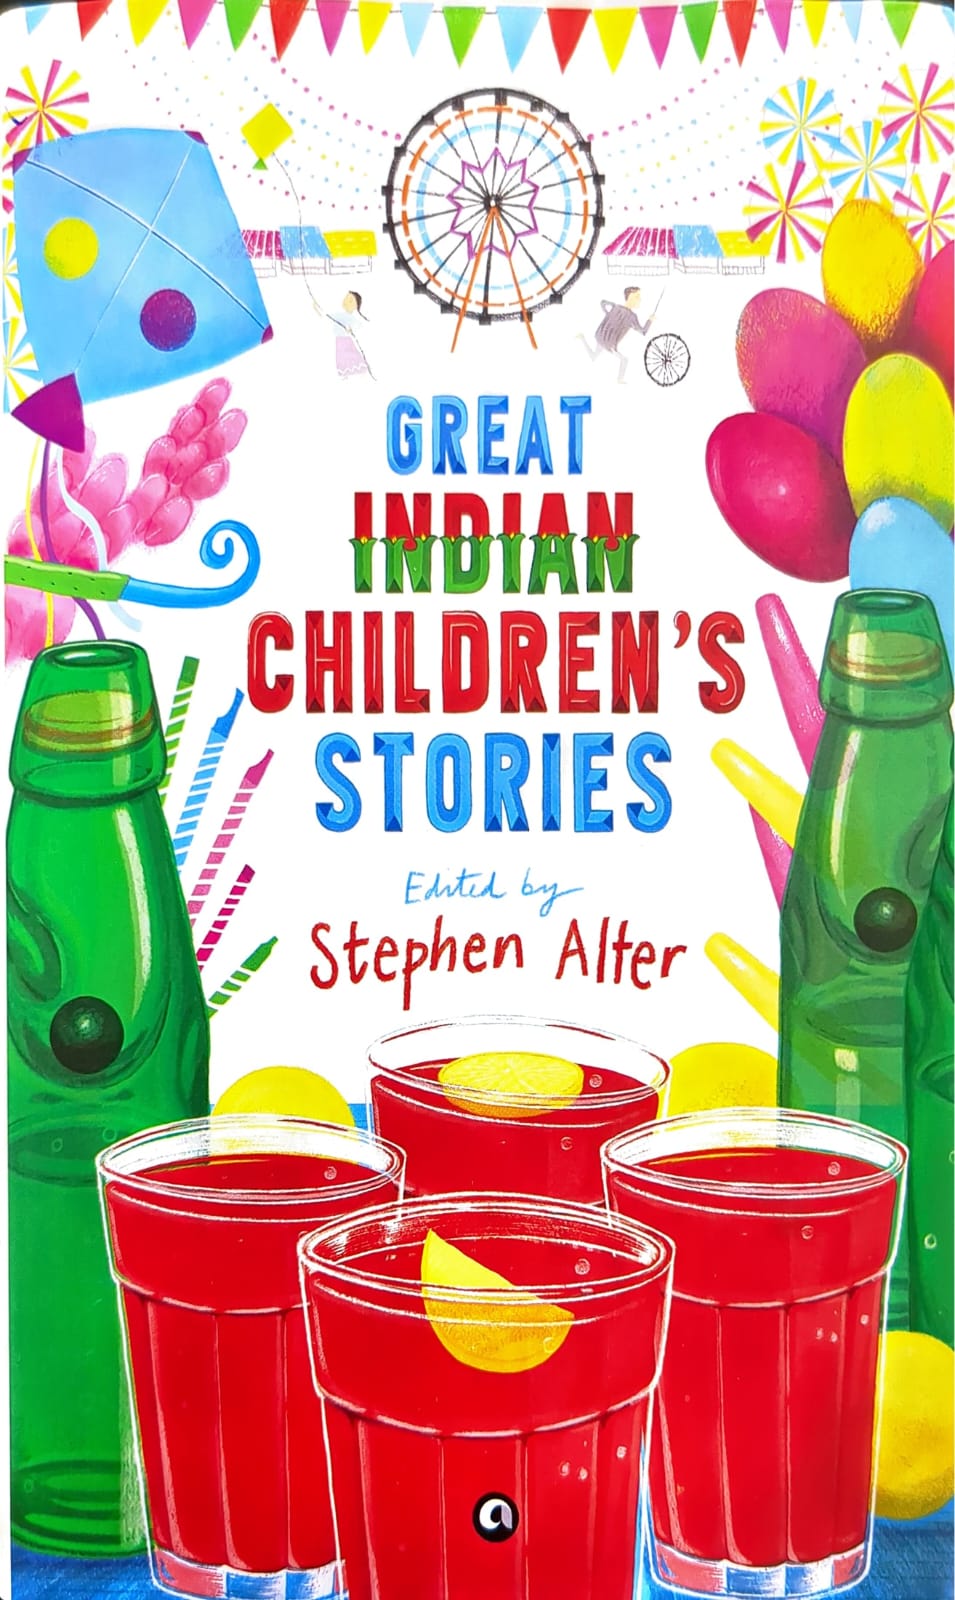 Great Indian Children's Stories